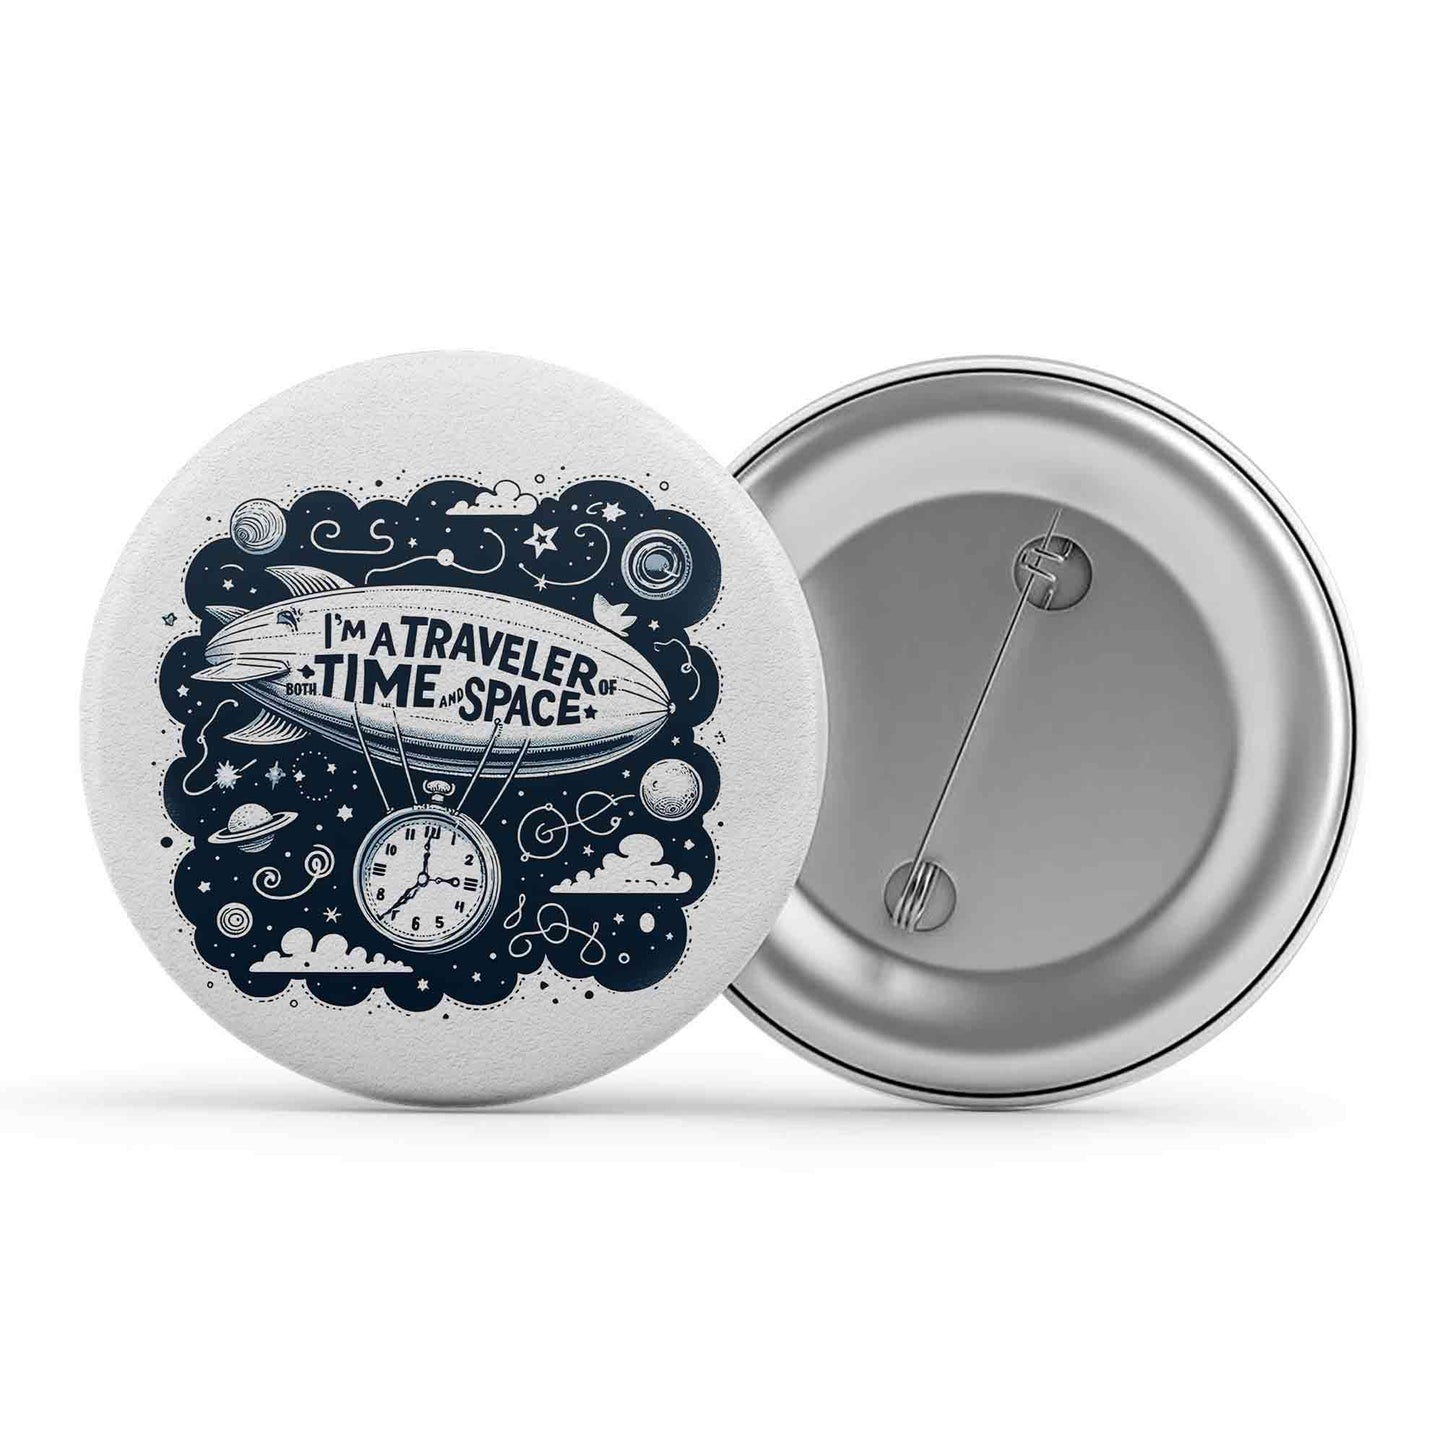 Led Zeppelin Badge Metal Pin Button The Banyan Tee TBT